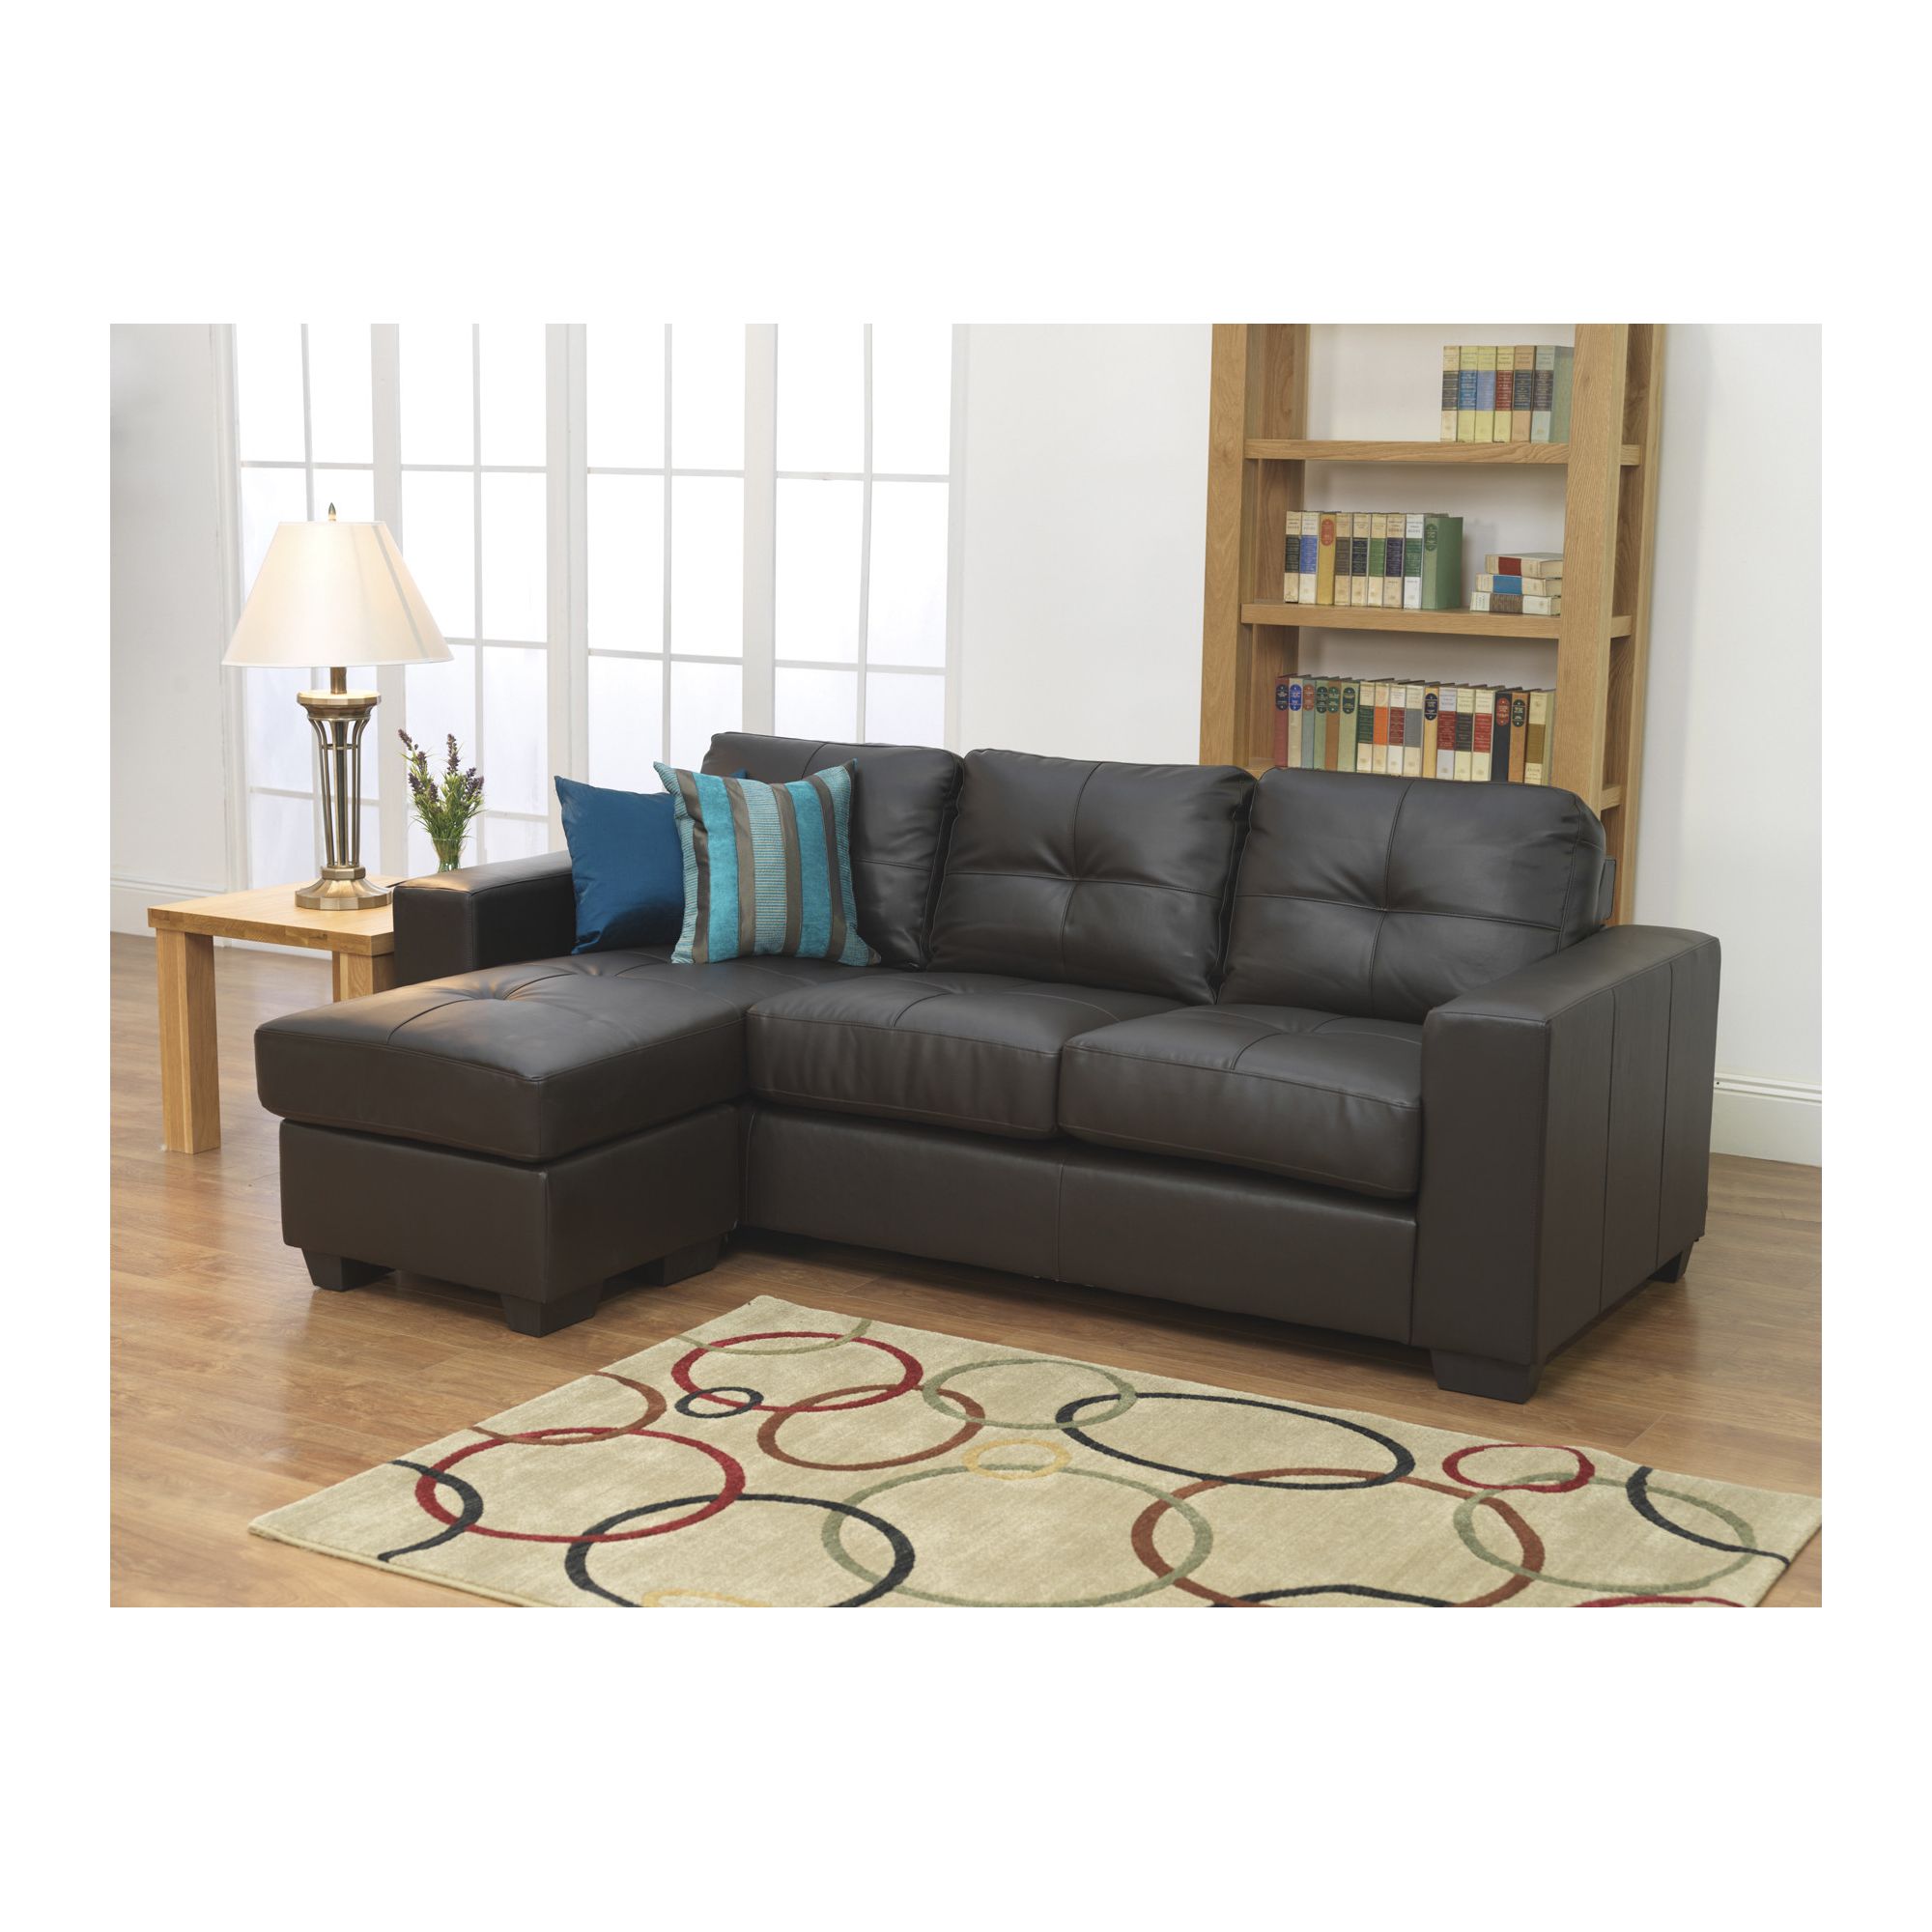 Furniture Link Gemona L Sofa in Brown at Tesco Direct